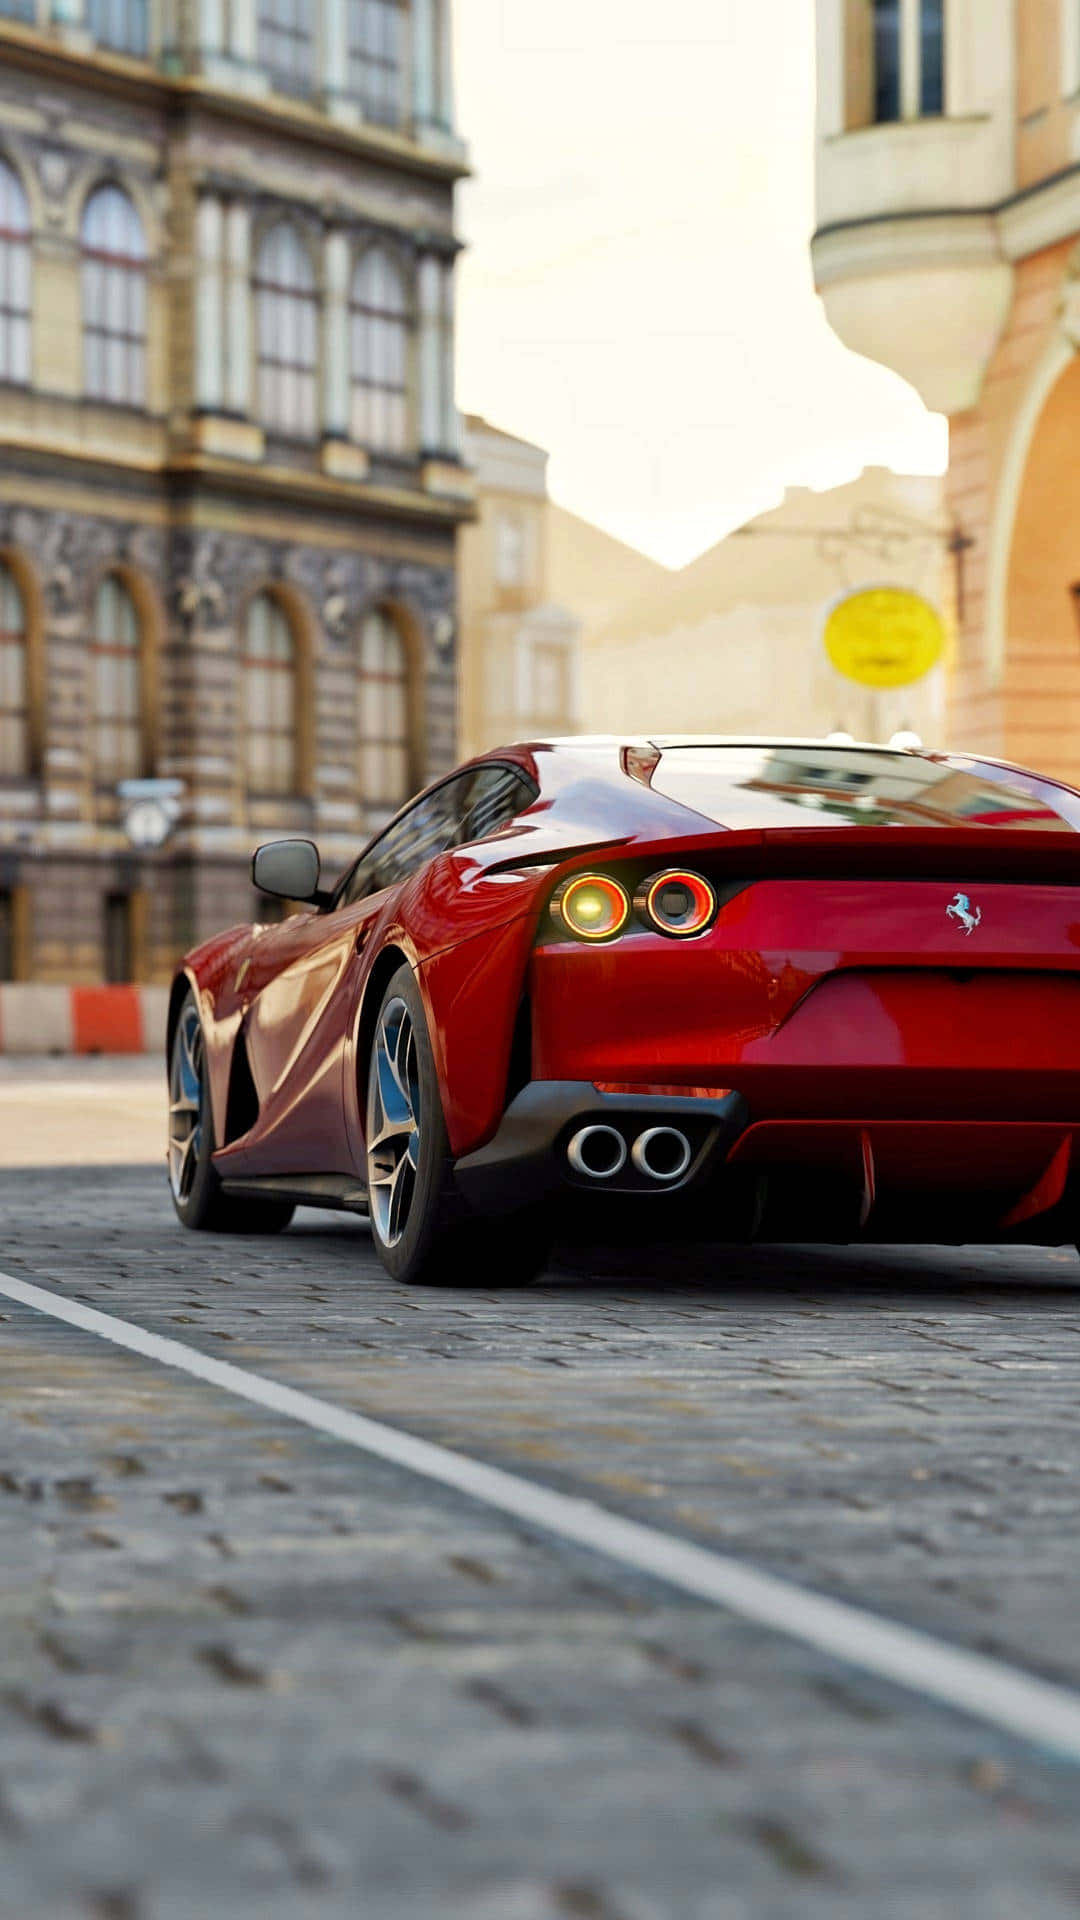 Ferrarif12tdi - Una Macchina Sportiva Rossa Su Una Strada Cittadina